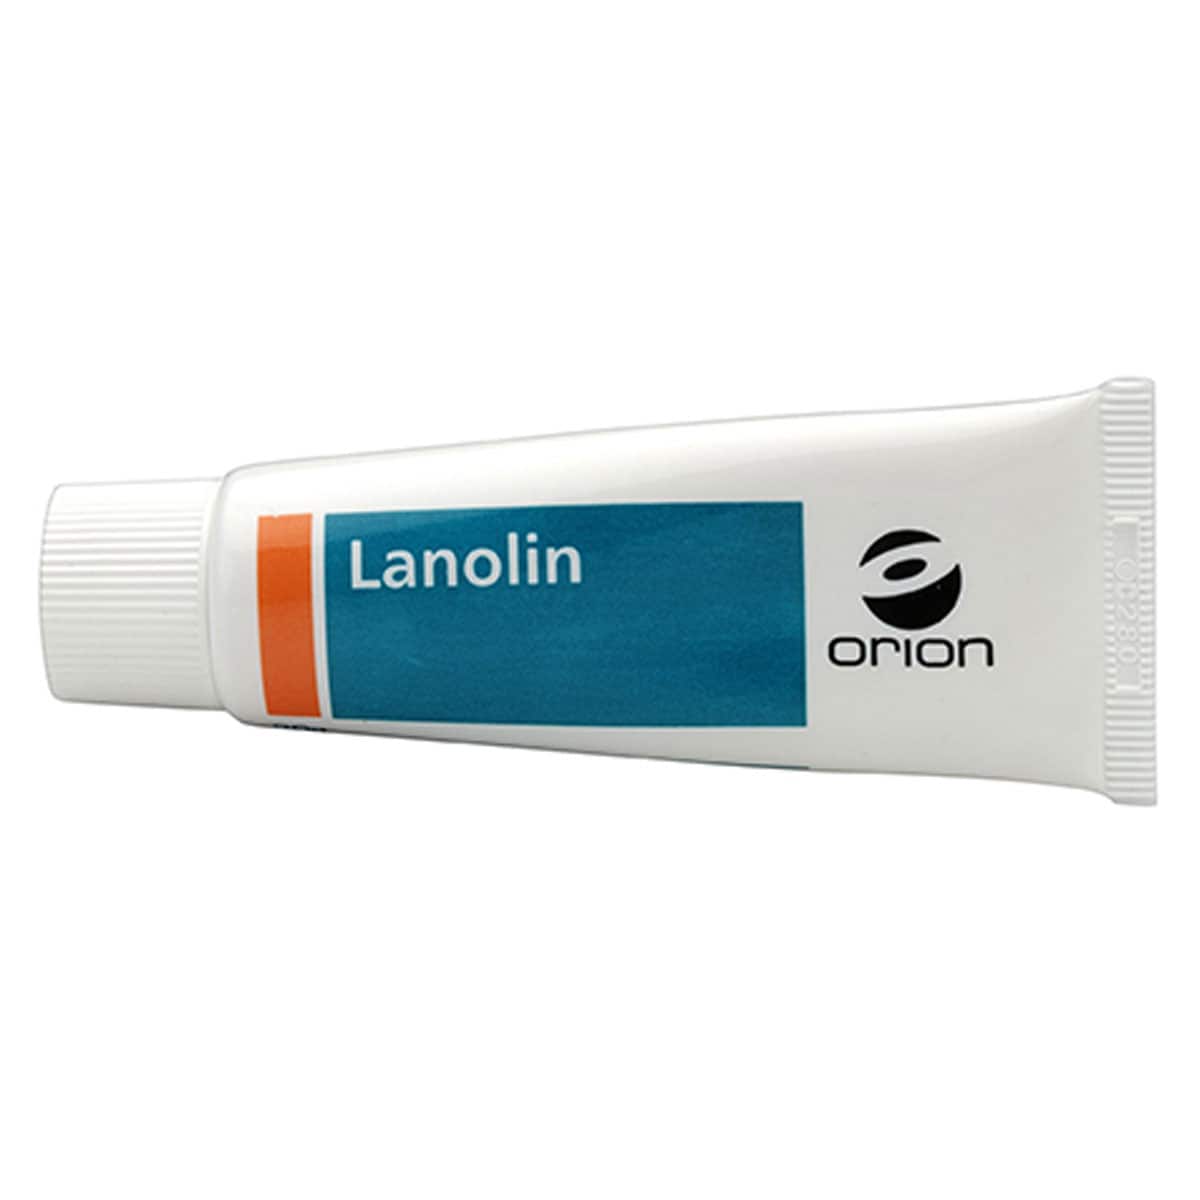 Orion Lanolin Ointment Tube 20g